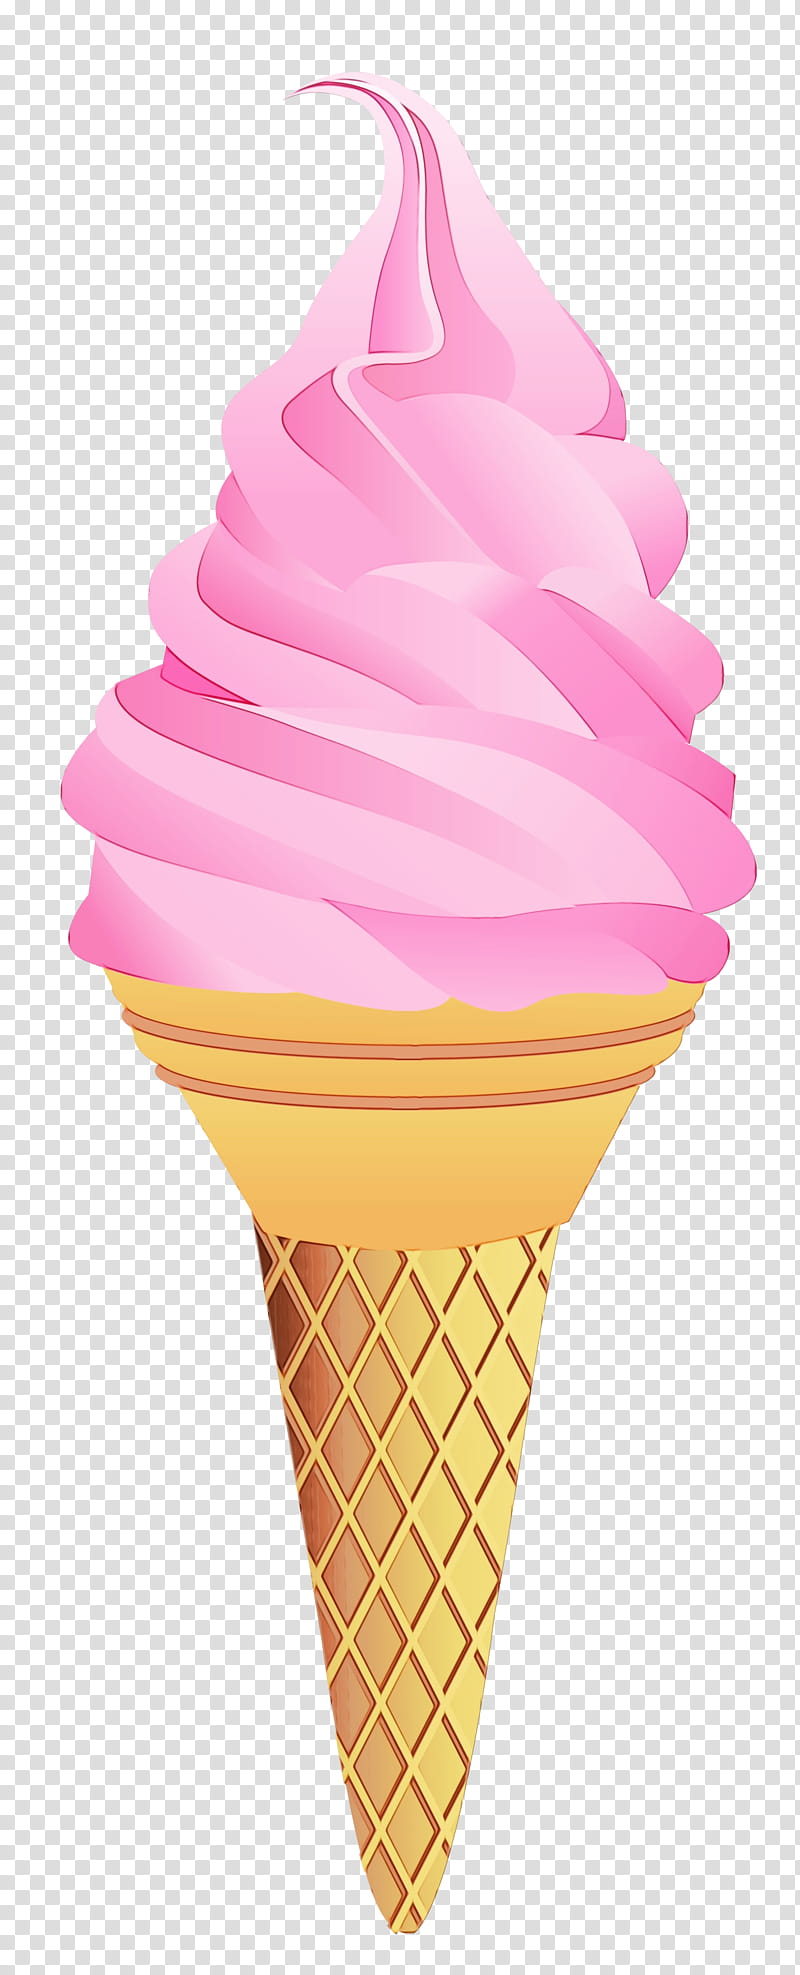 Ice Cream Cone, Neapolitan Ice Cream, Ice Cream Cones, Dessert, Flavor, Food, Sprinkles, Strawberry transparent background PNG clipart